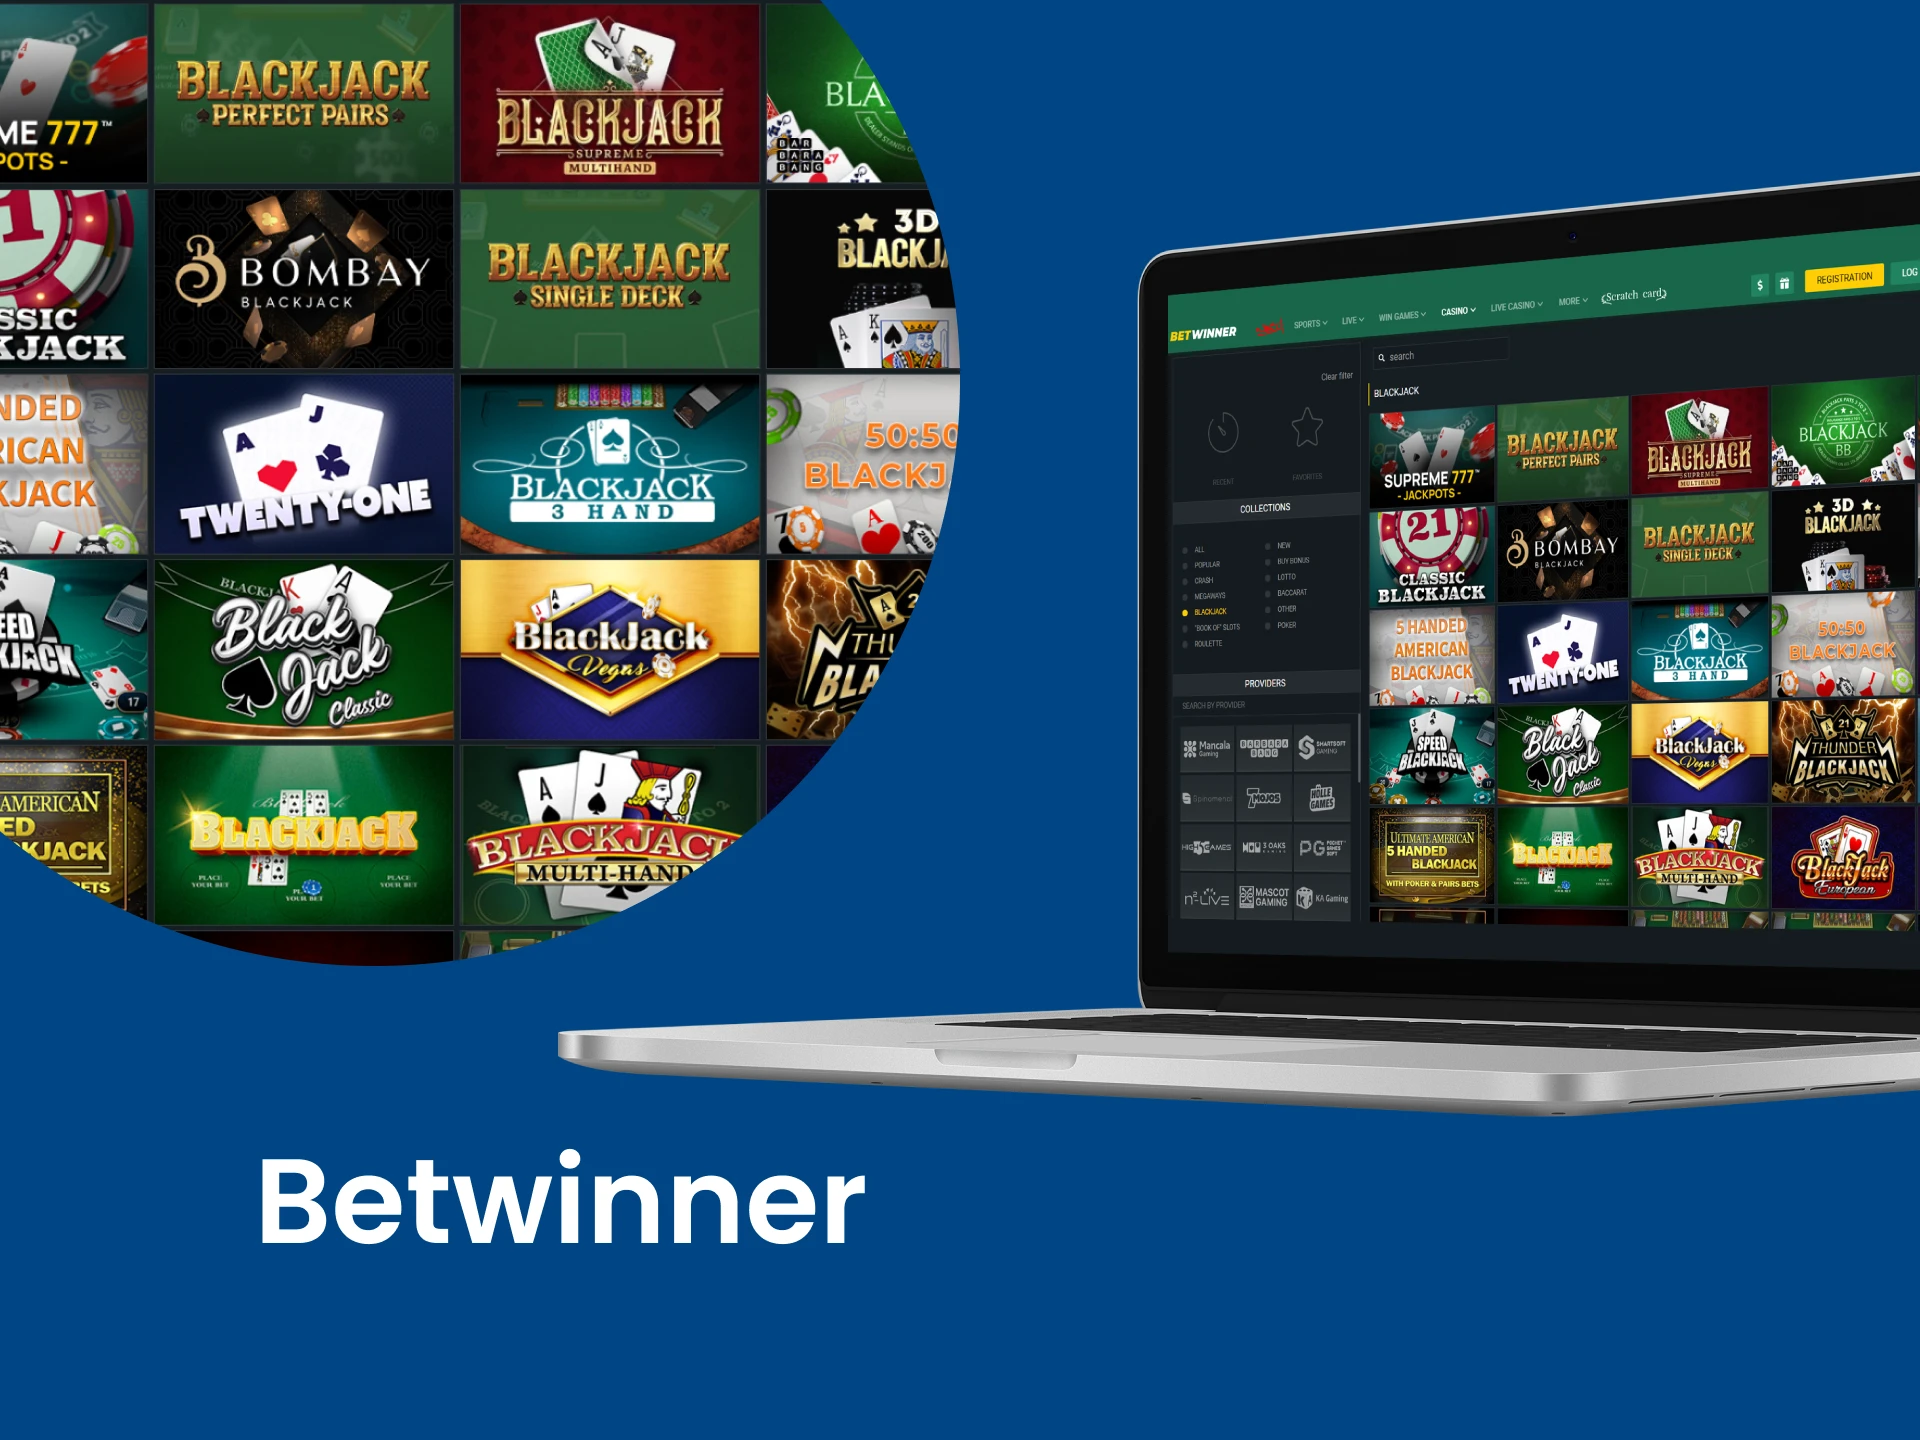 For blackjack games, choose Betwinner casino.